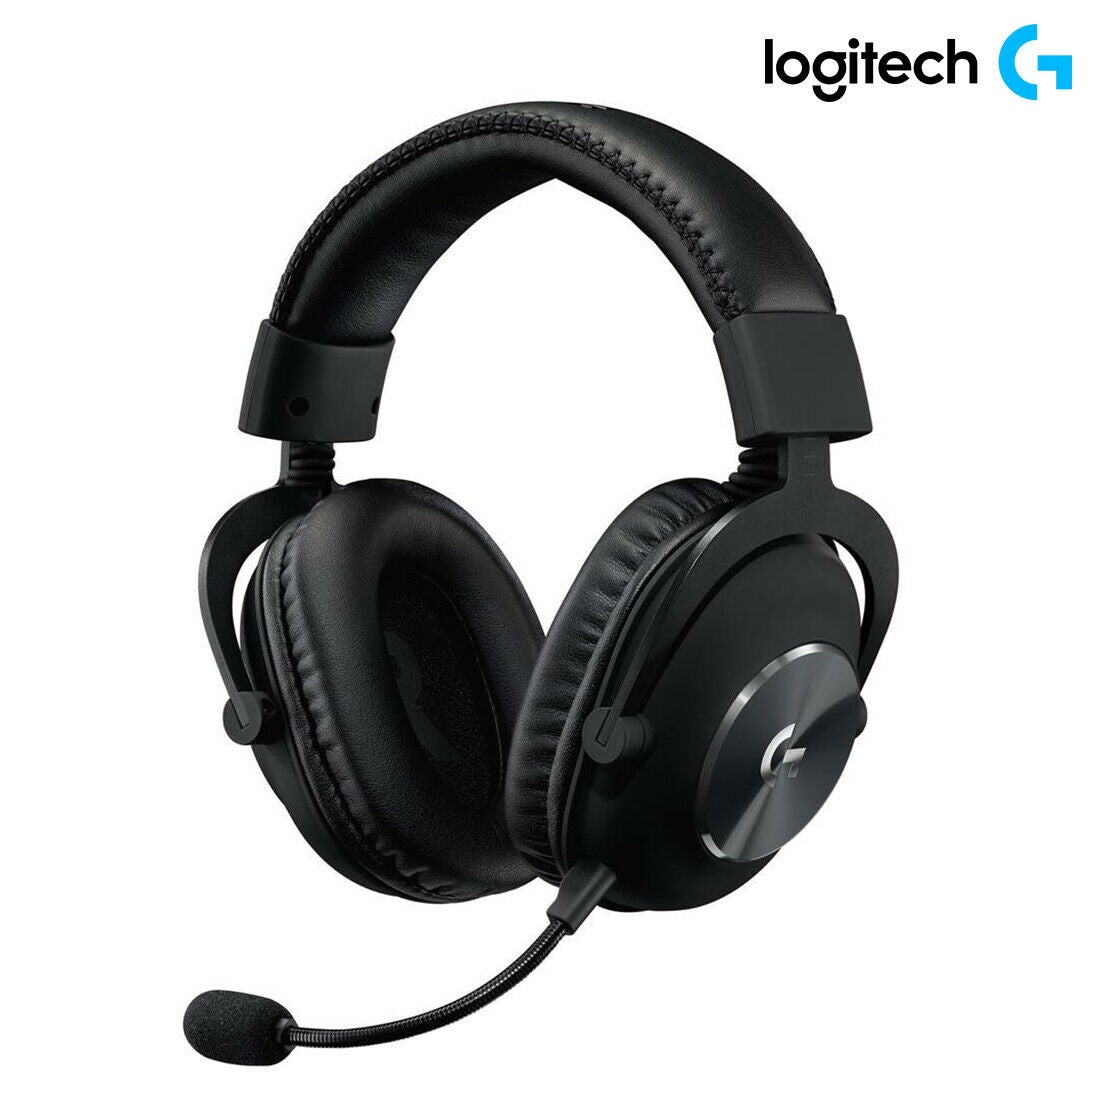 Logitech G Logitech G935 Over Ear Wireless Headset, Black & Logitech G G613  Wireless Mechanical Gaming Keyboard, Black